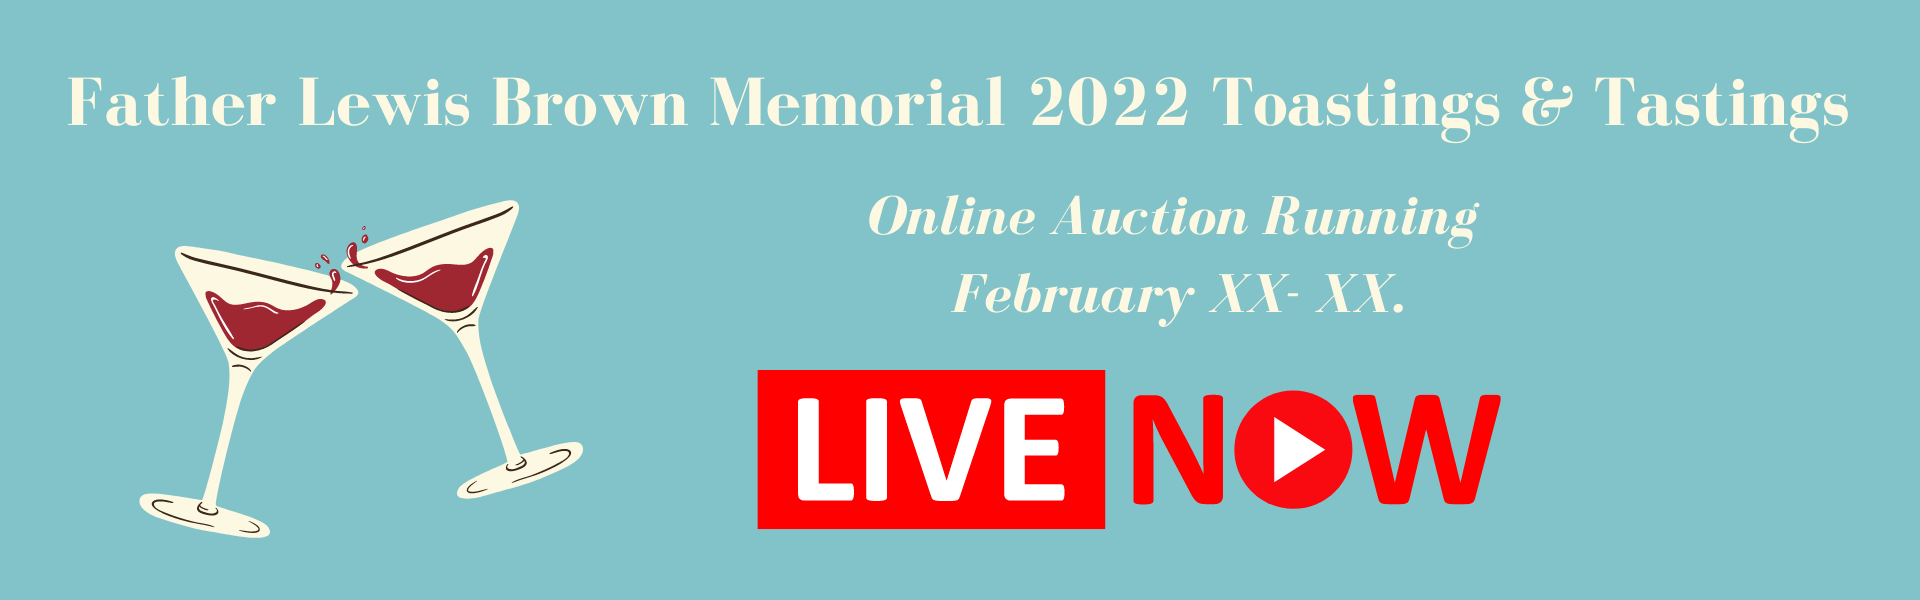 2022 Toastings Tastings Auction Live 1920 x 1080 px